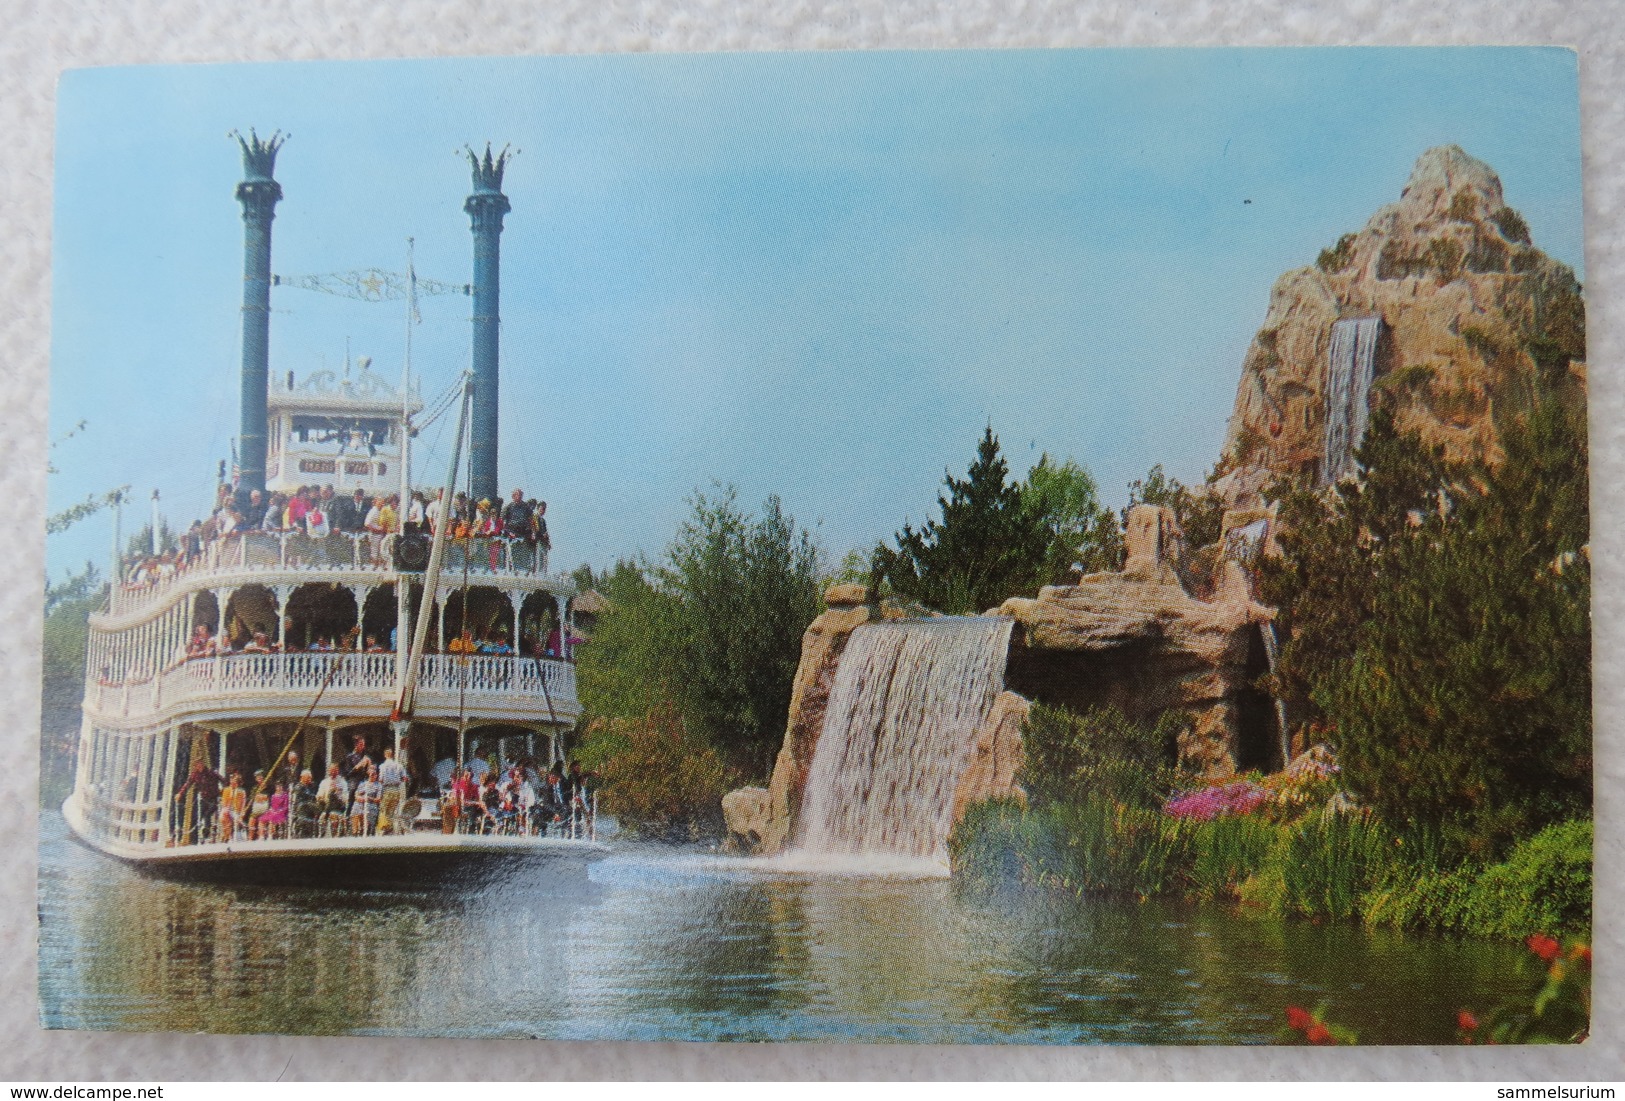 (10/2/38) AK "Disneyland" Mark Twain Steamboat - Anaheim